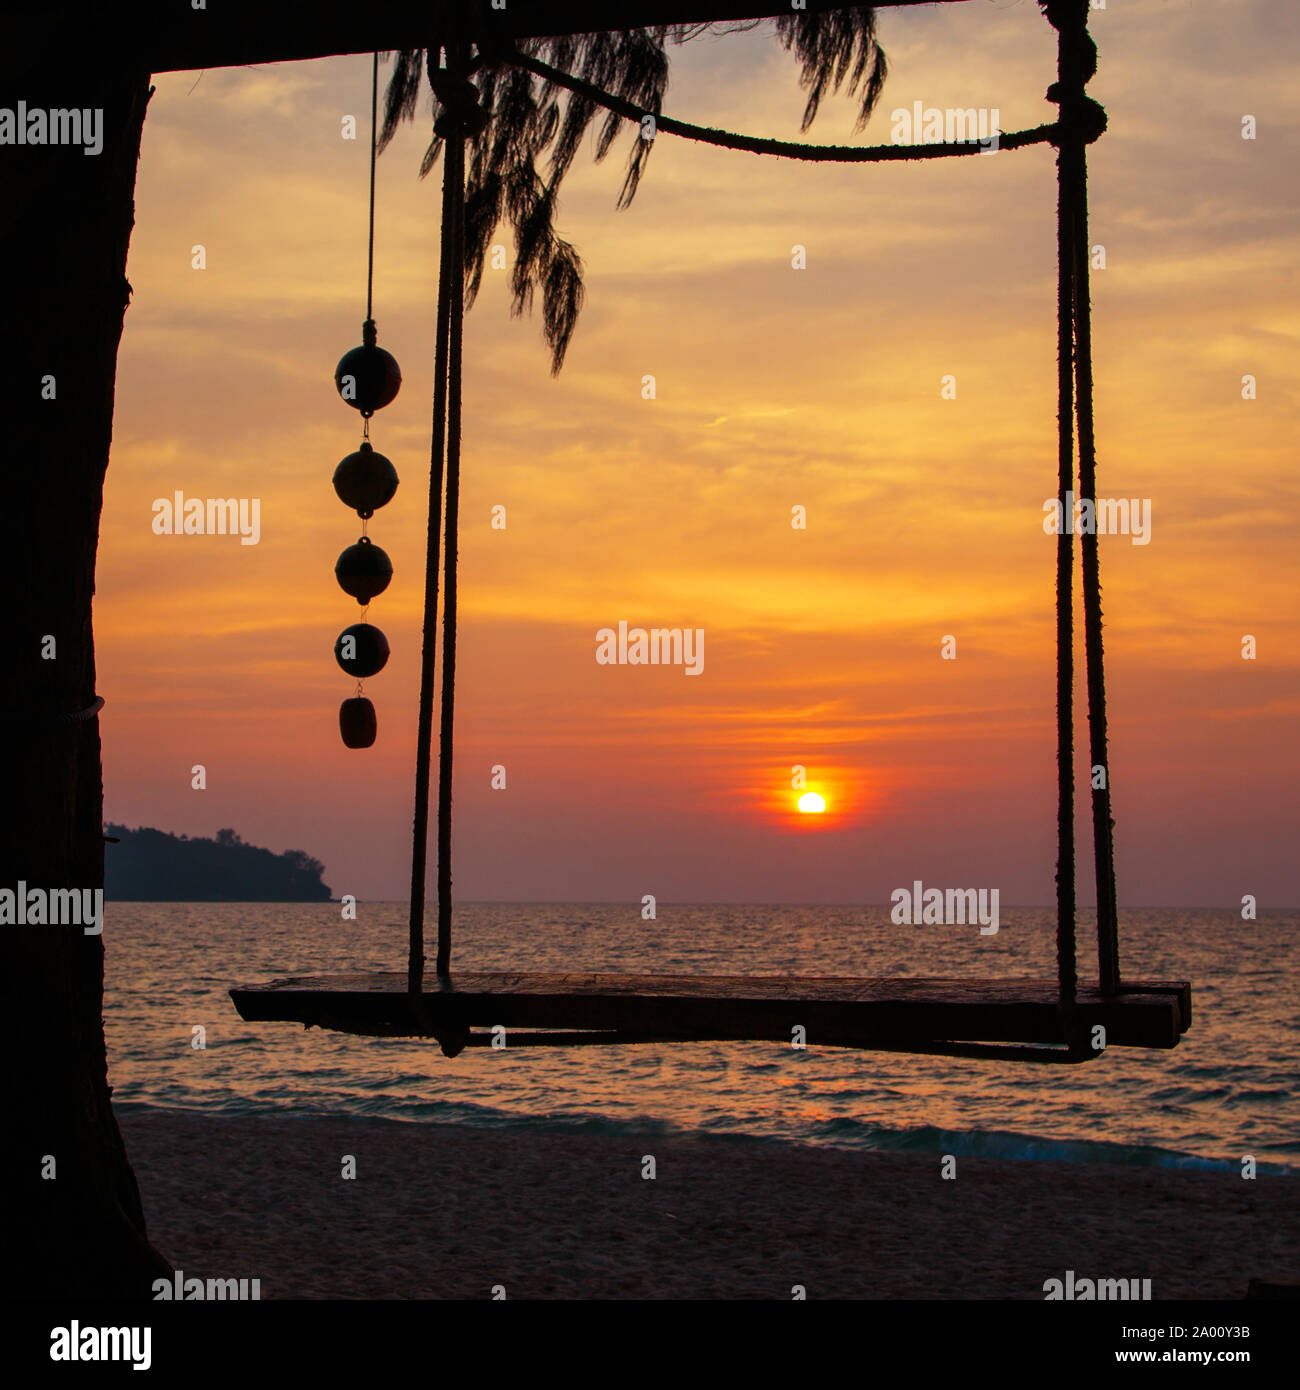 Holz- swing Sonnenuntergang auf dem Meer Strand. Stockfoto